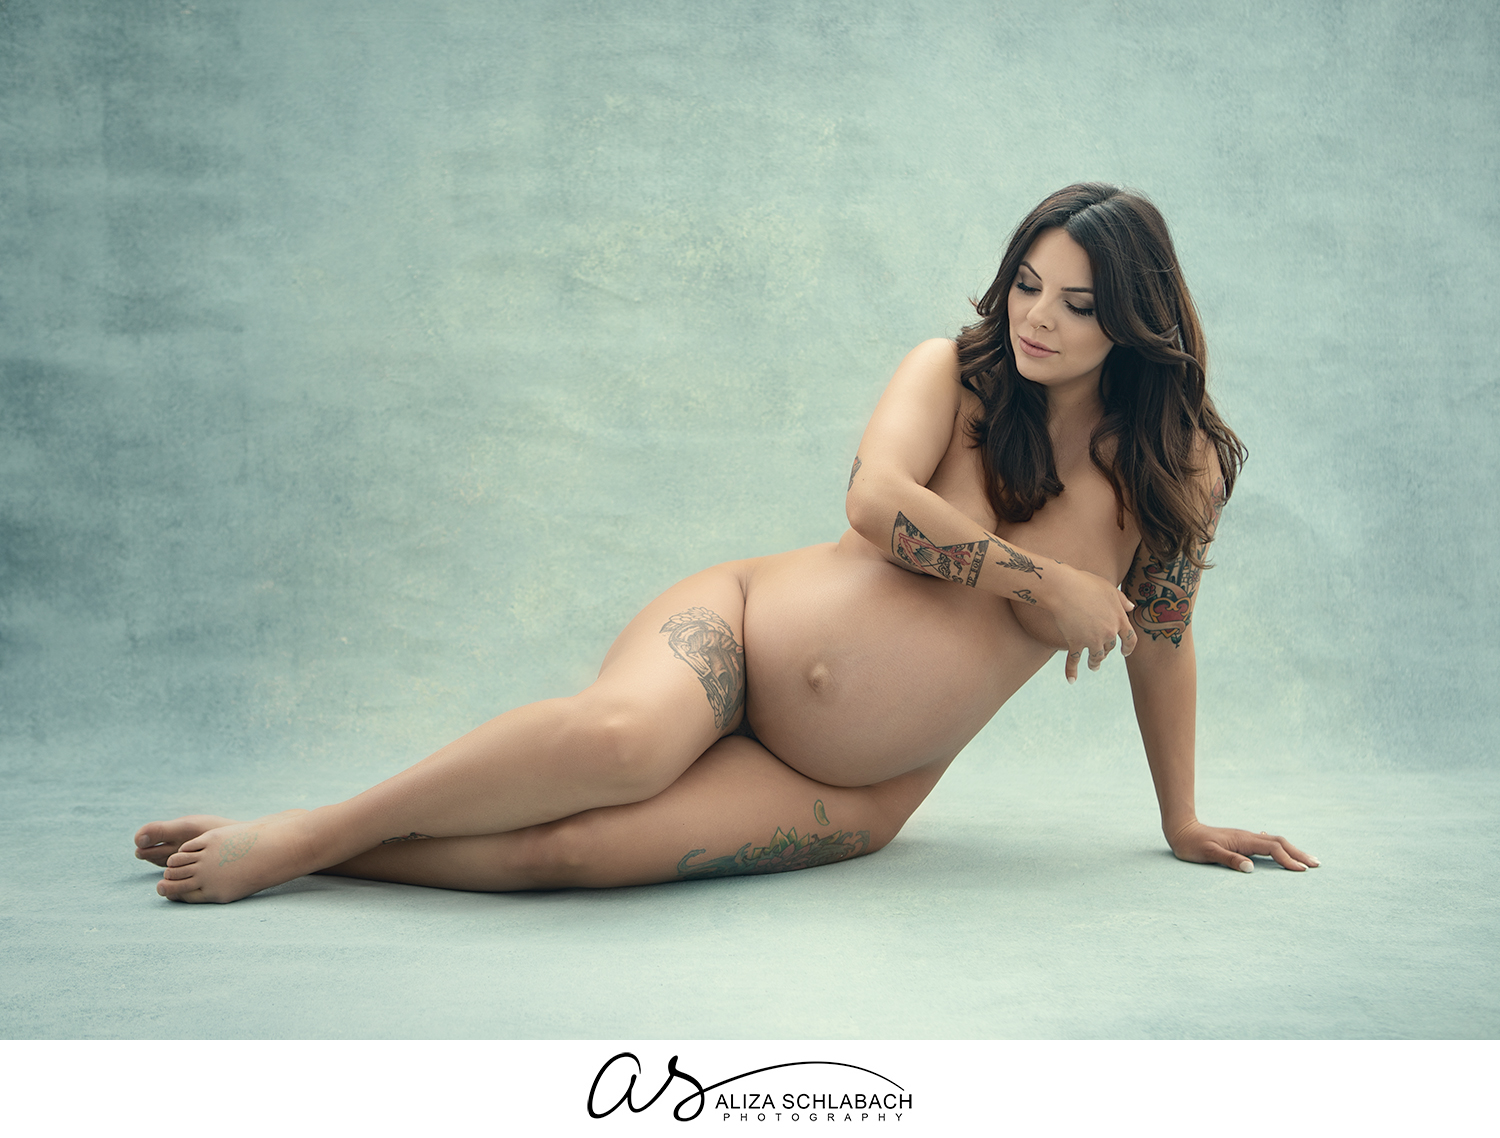 Dalealbo Online Dating Nude Pregnancy Portrait